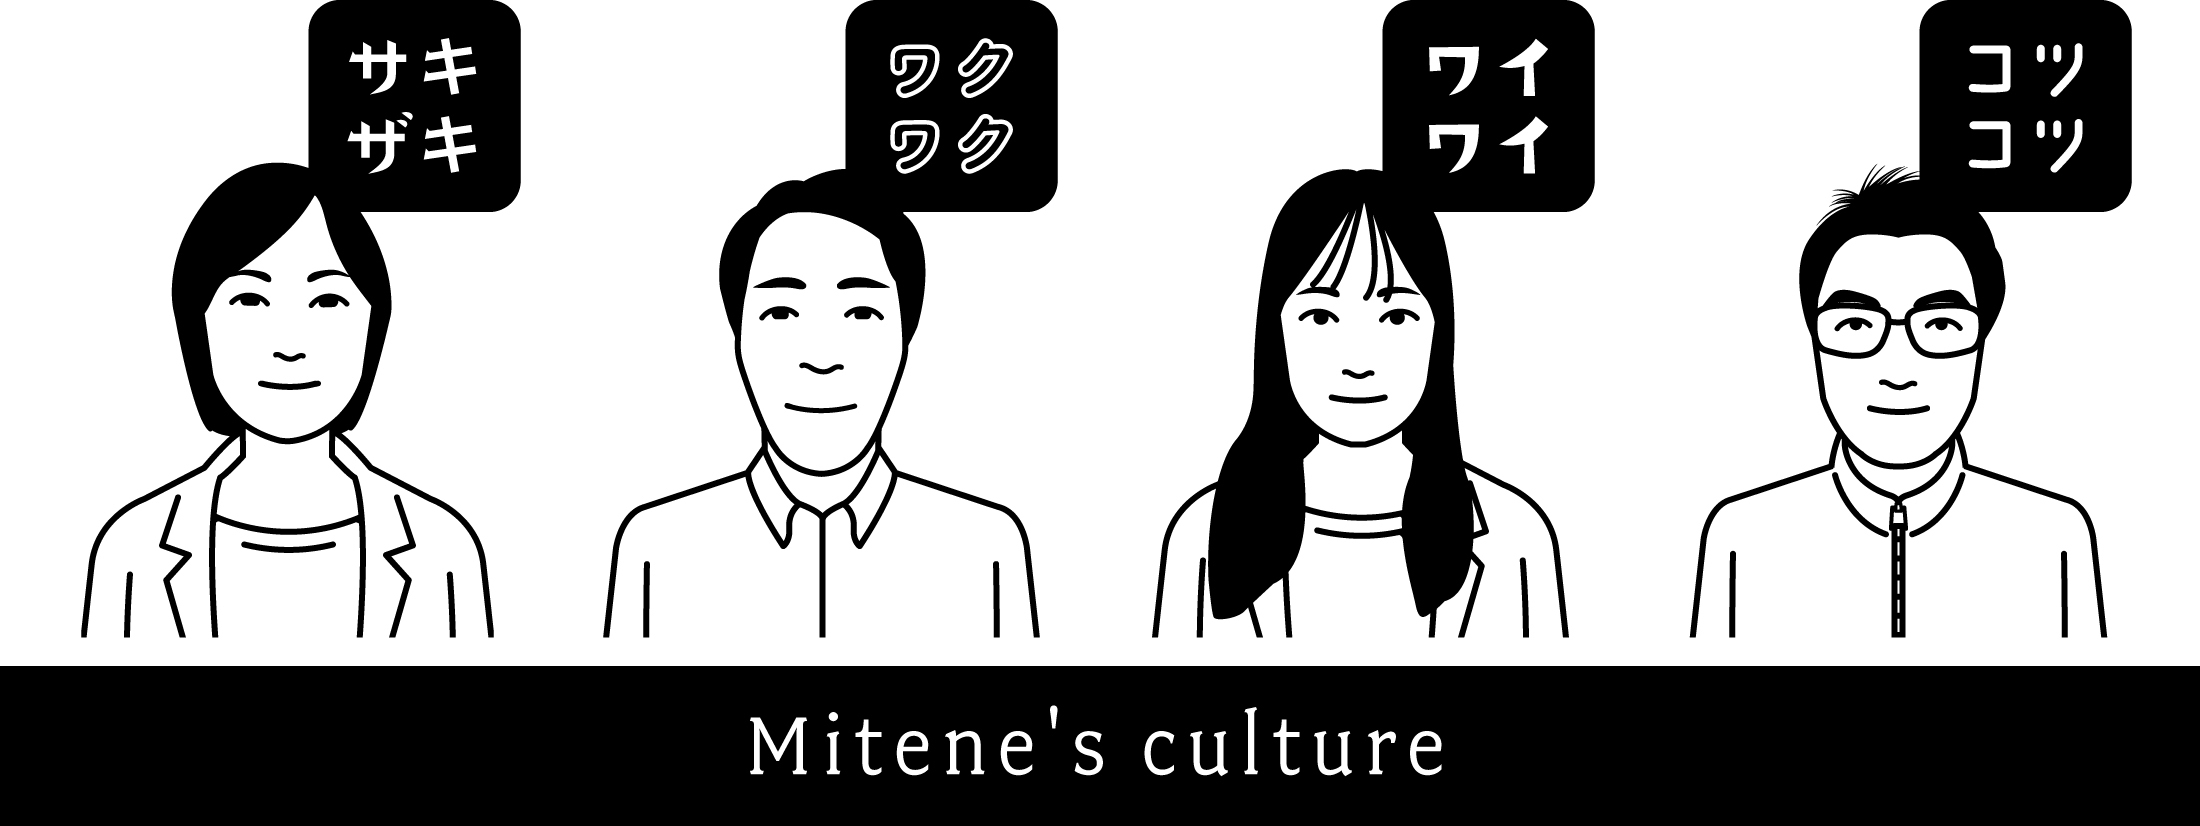 Mitene's culture